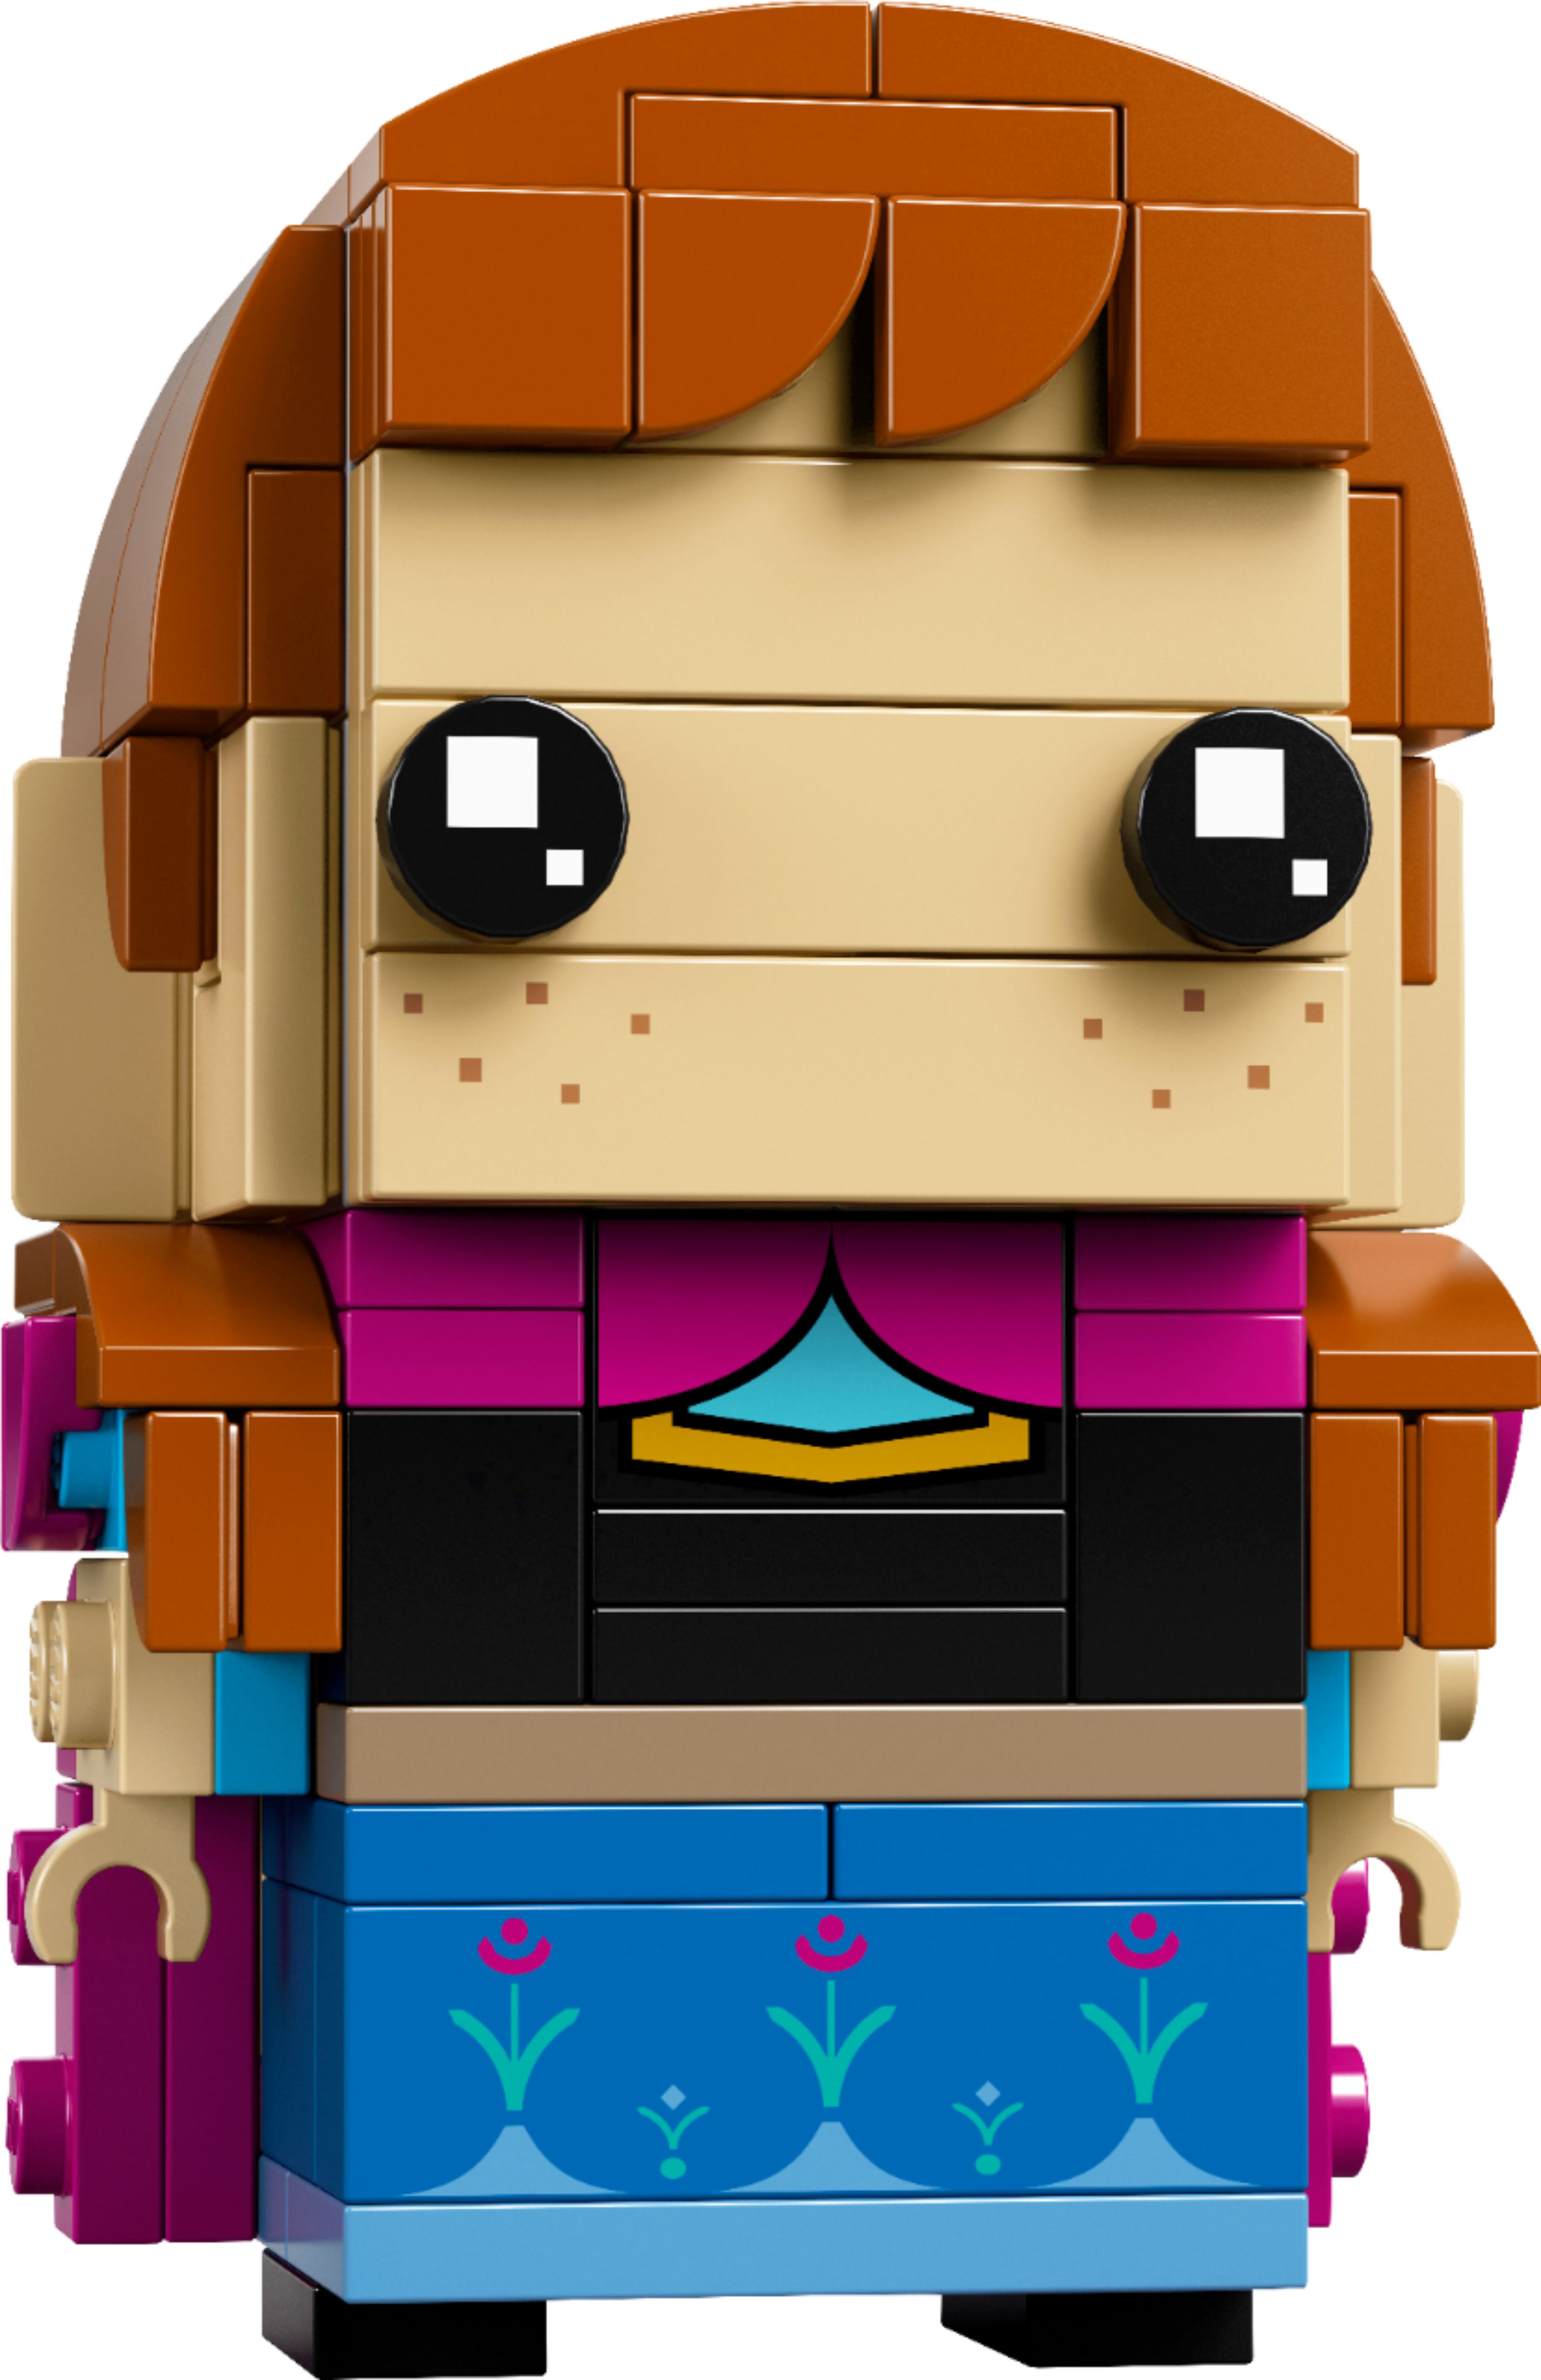 LEGO 41618 Brickheadz Disney Frozen Anna & Olaf 201pcs for sale online 